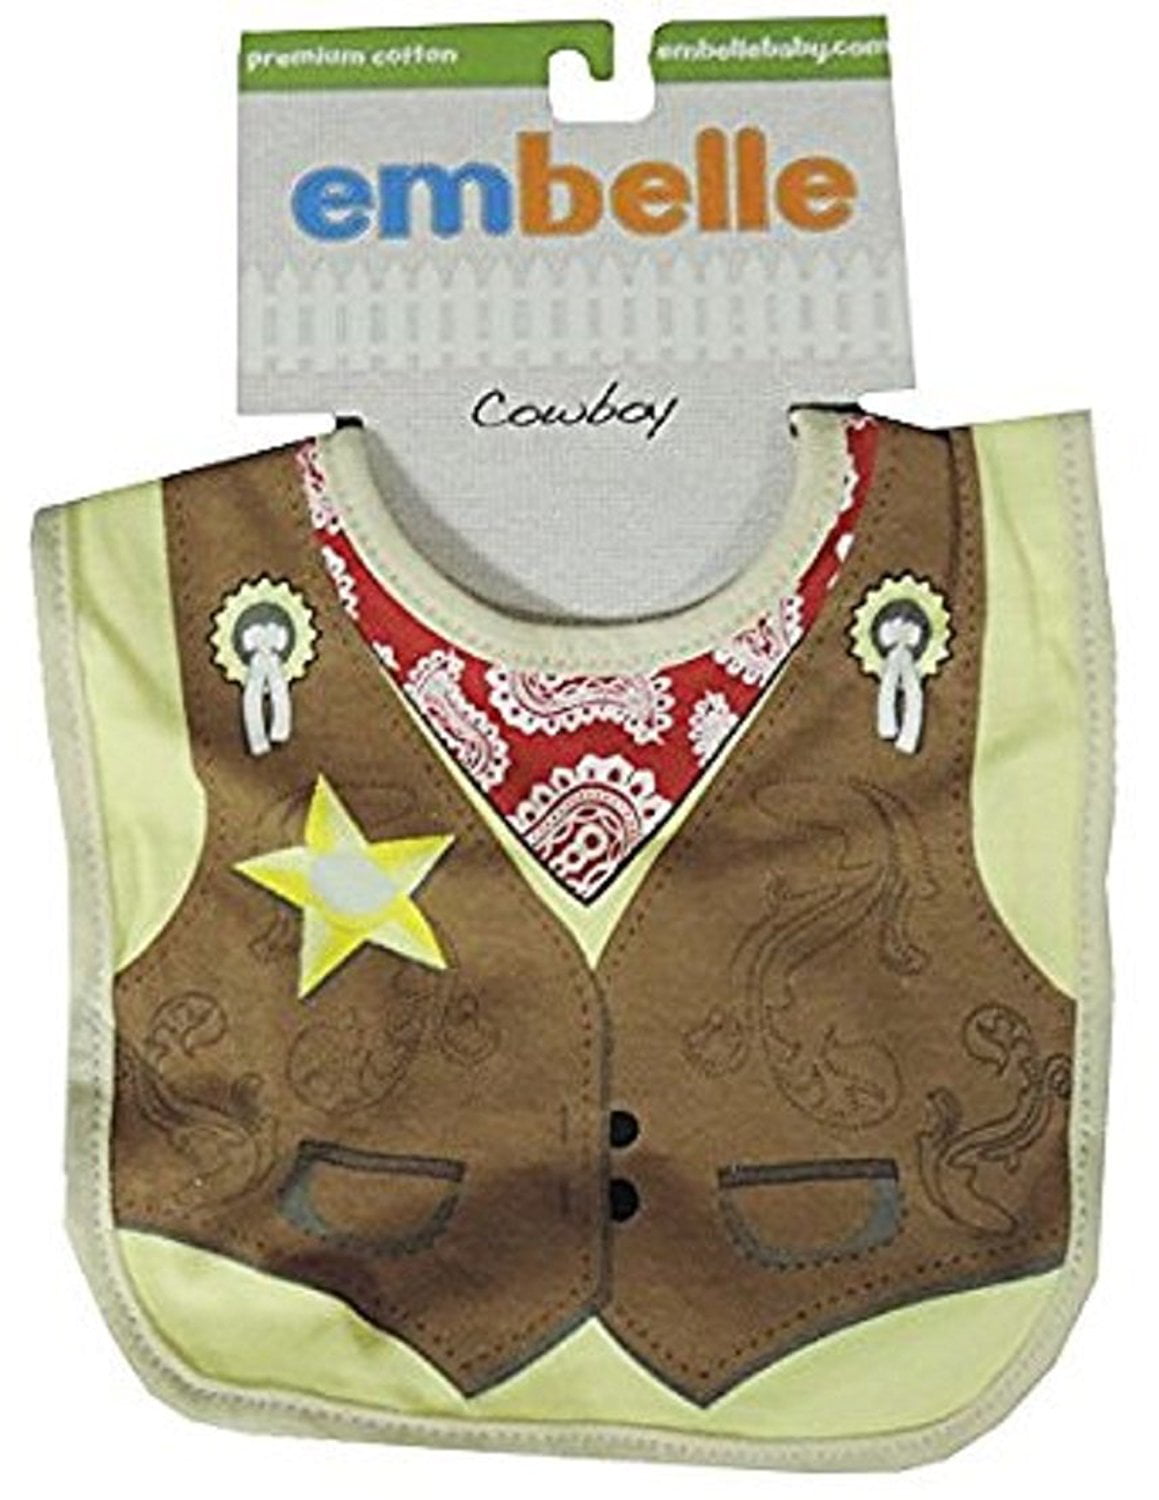 Embelle Wipe-Off Baby Bib Cowboy Themed 